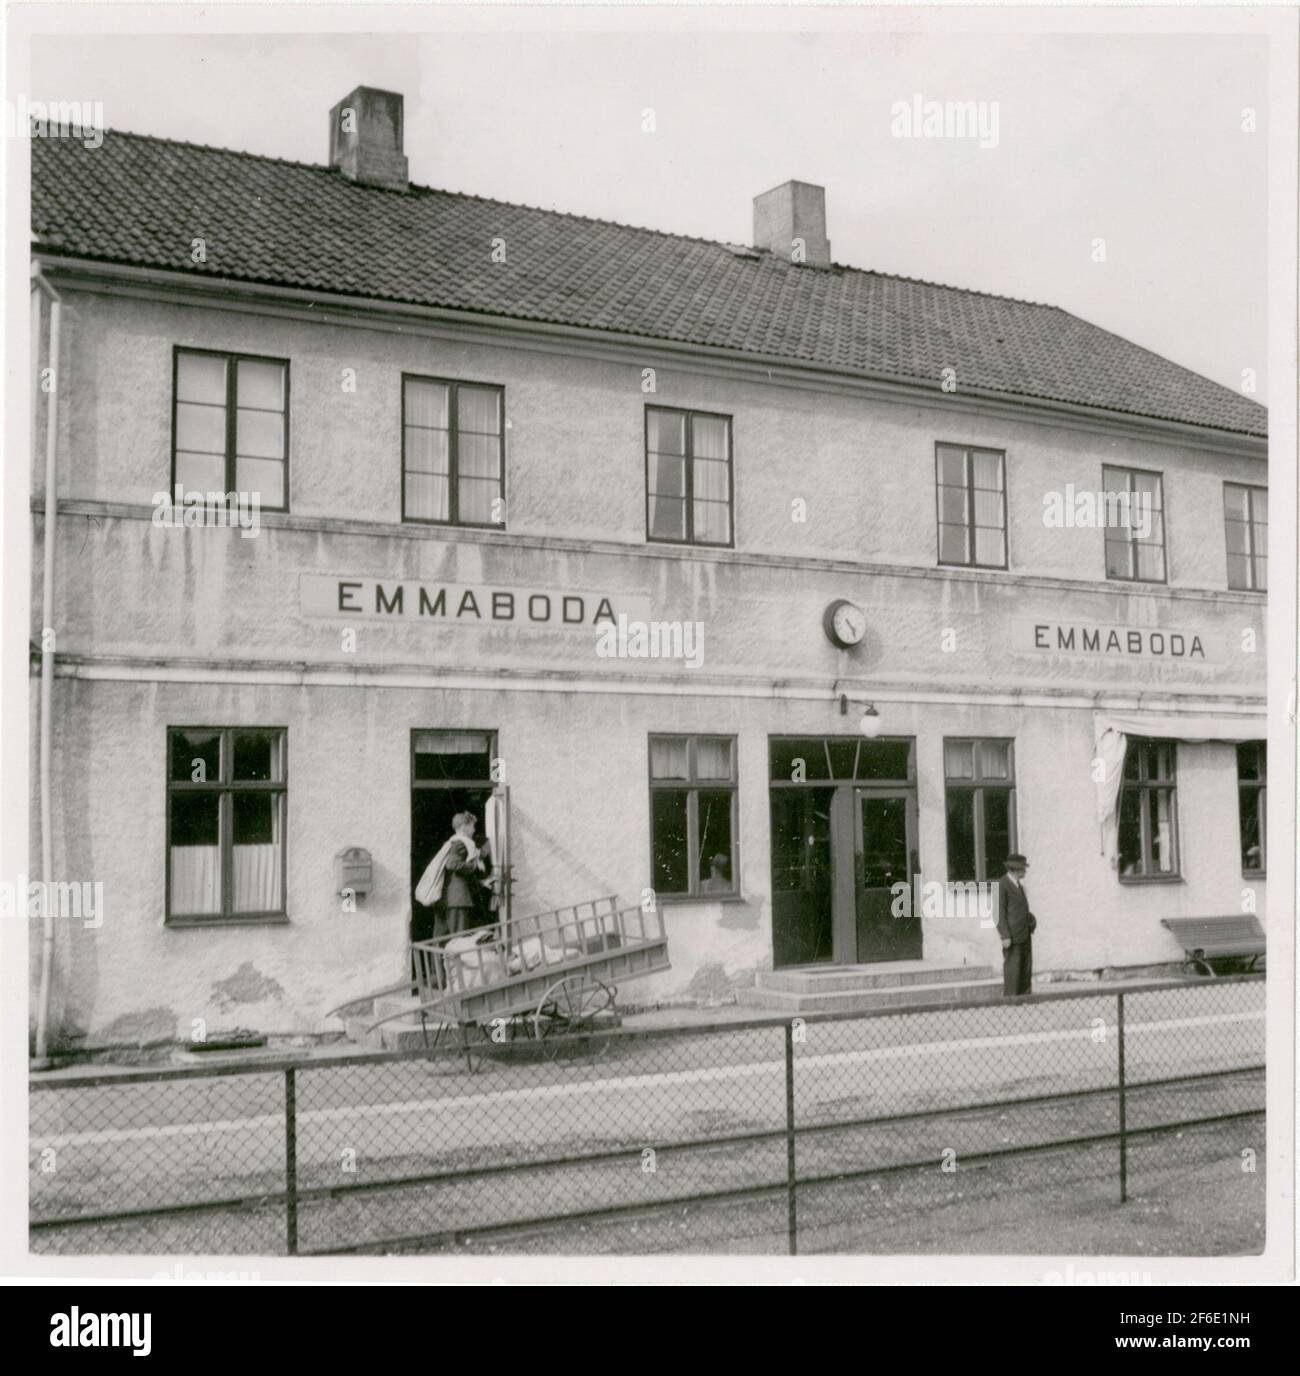 Emmaboda railway station. Stock Photo